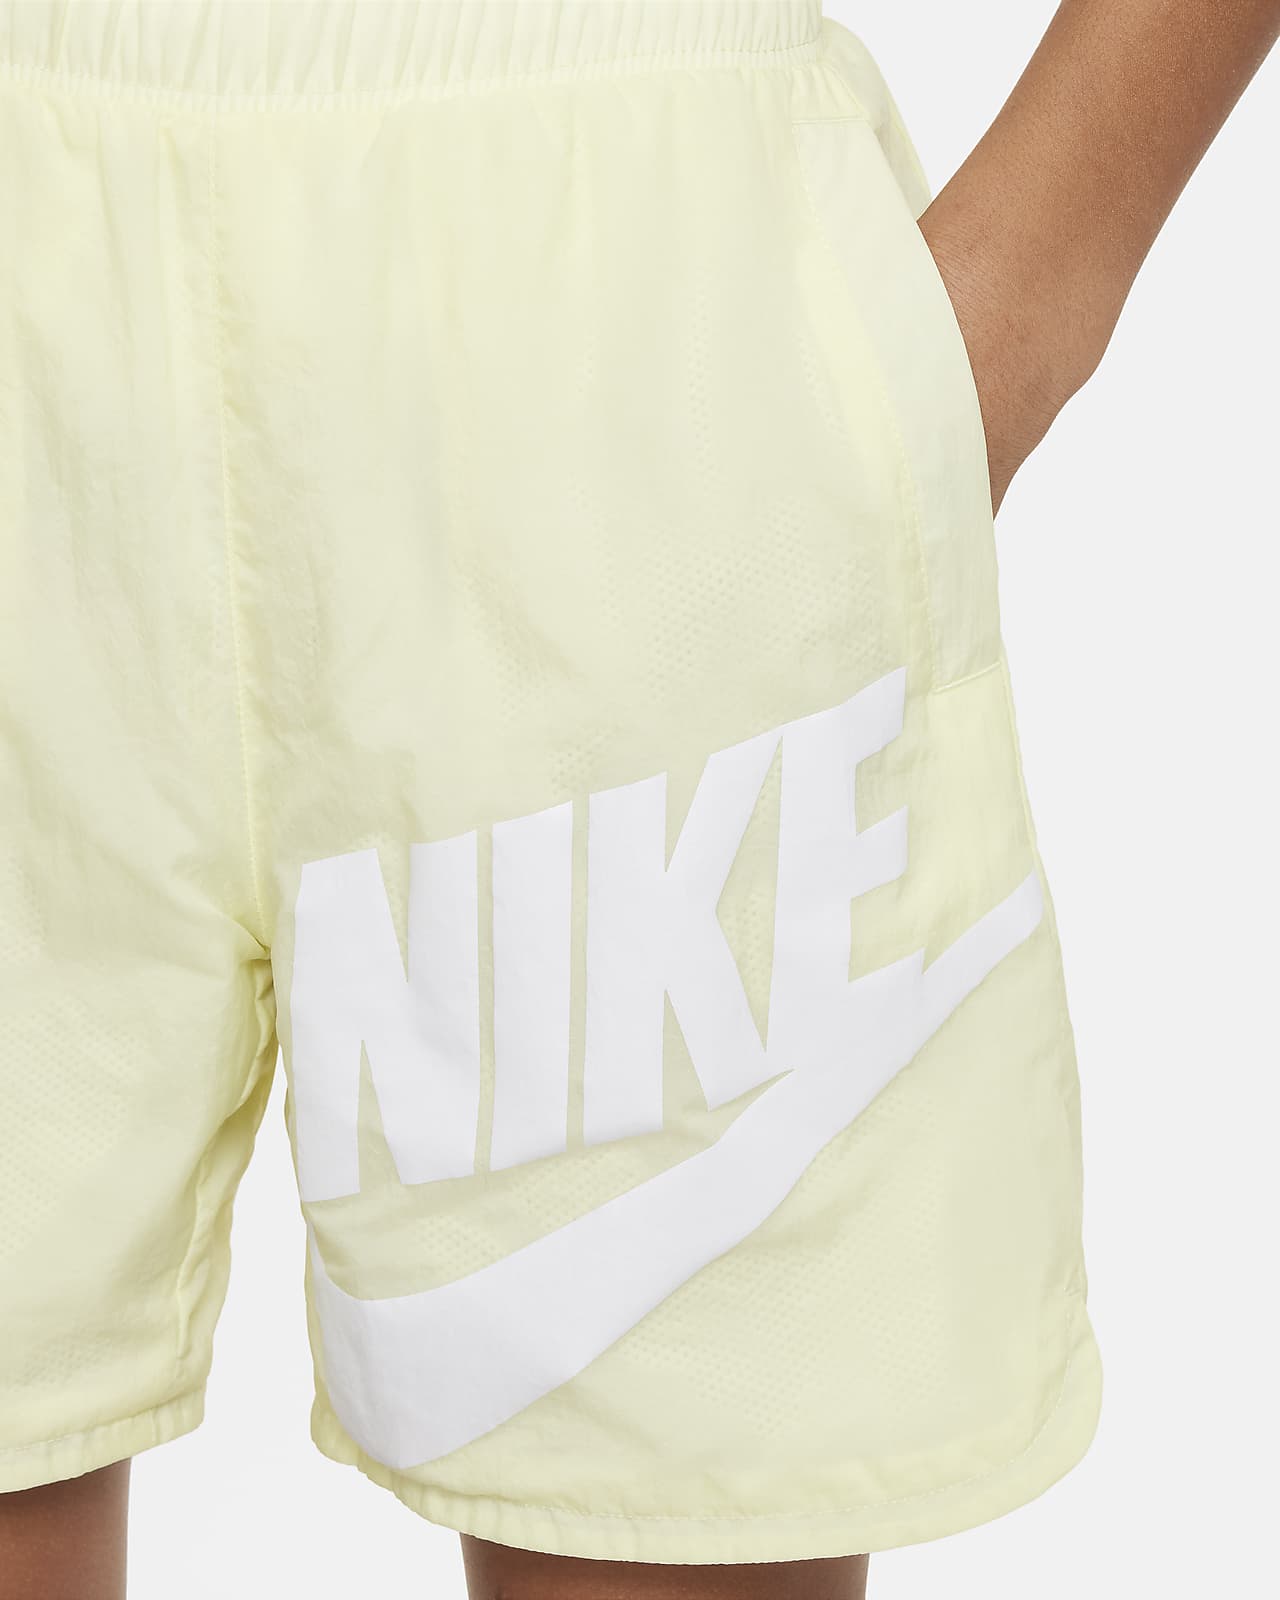 NWT Nike Boys YXL Royal Blue/Neon Yellow BIG SWOOSH Dri-Fit Shorts Set XL 